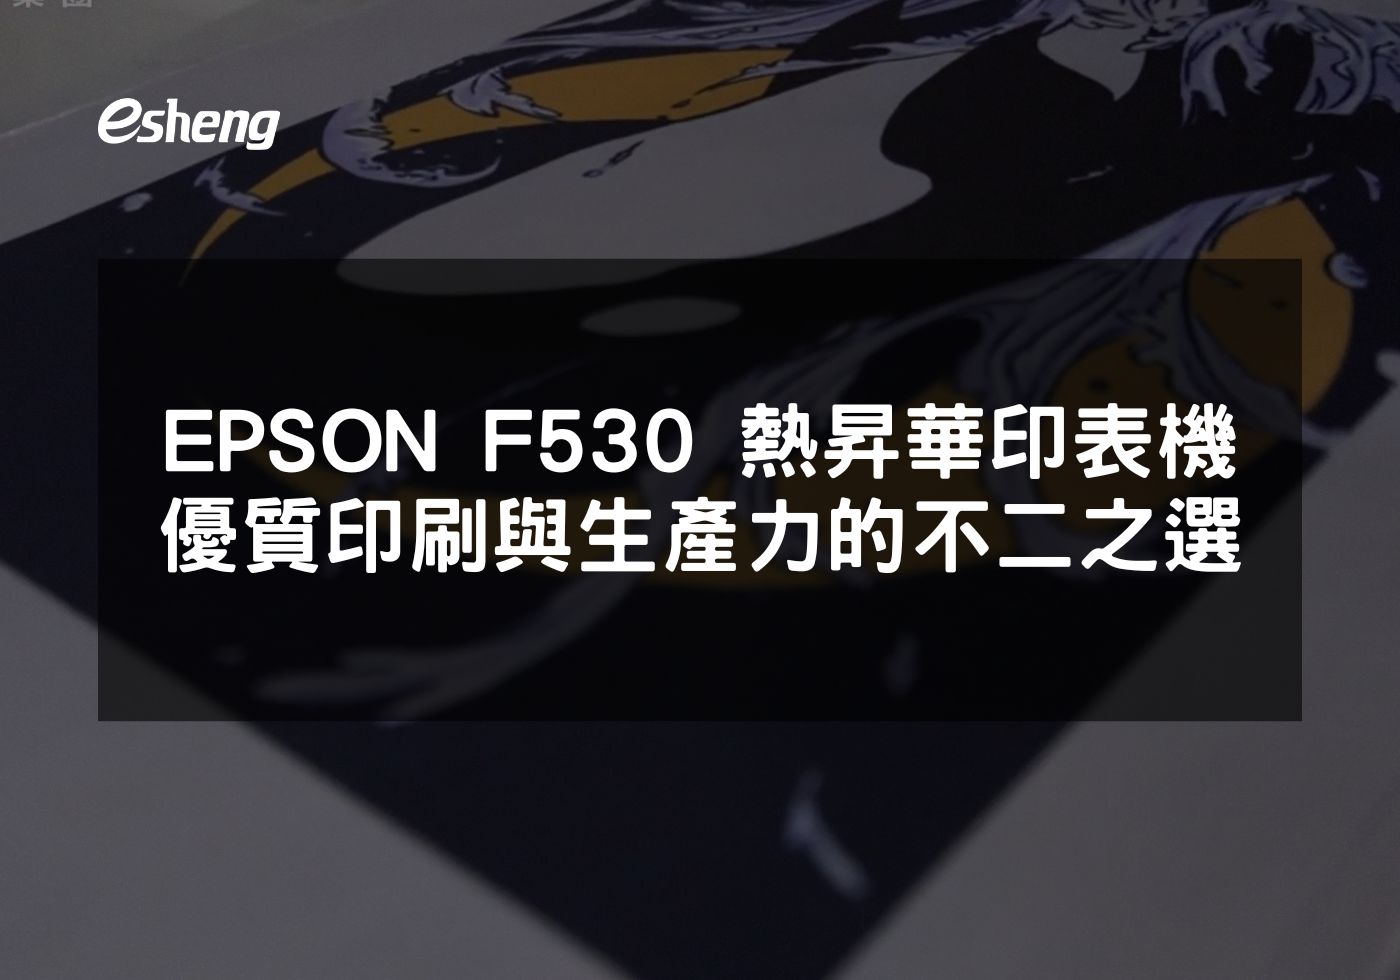 EPSON F530熱昇華印表機提升生產效率與印刷品質